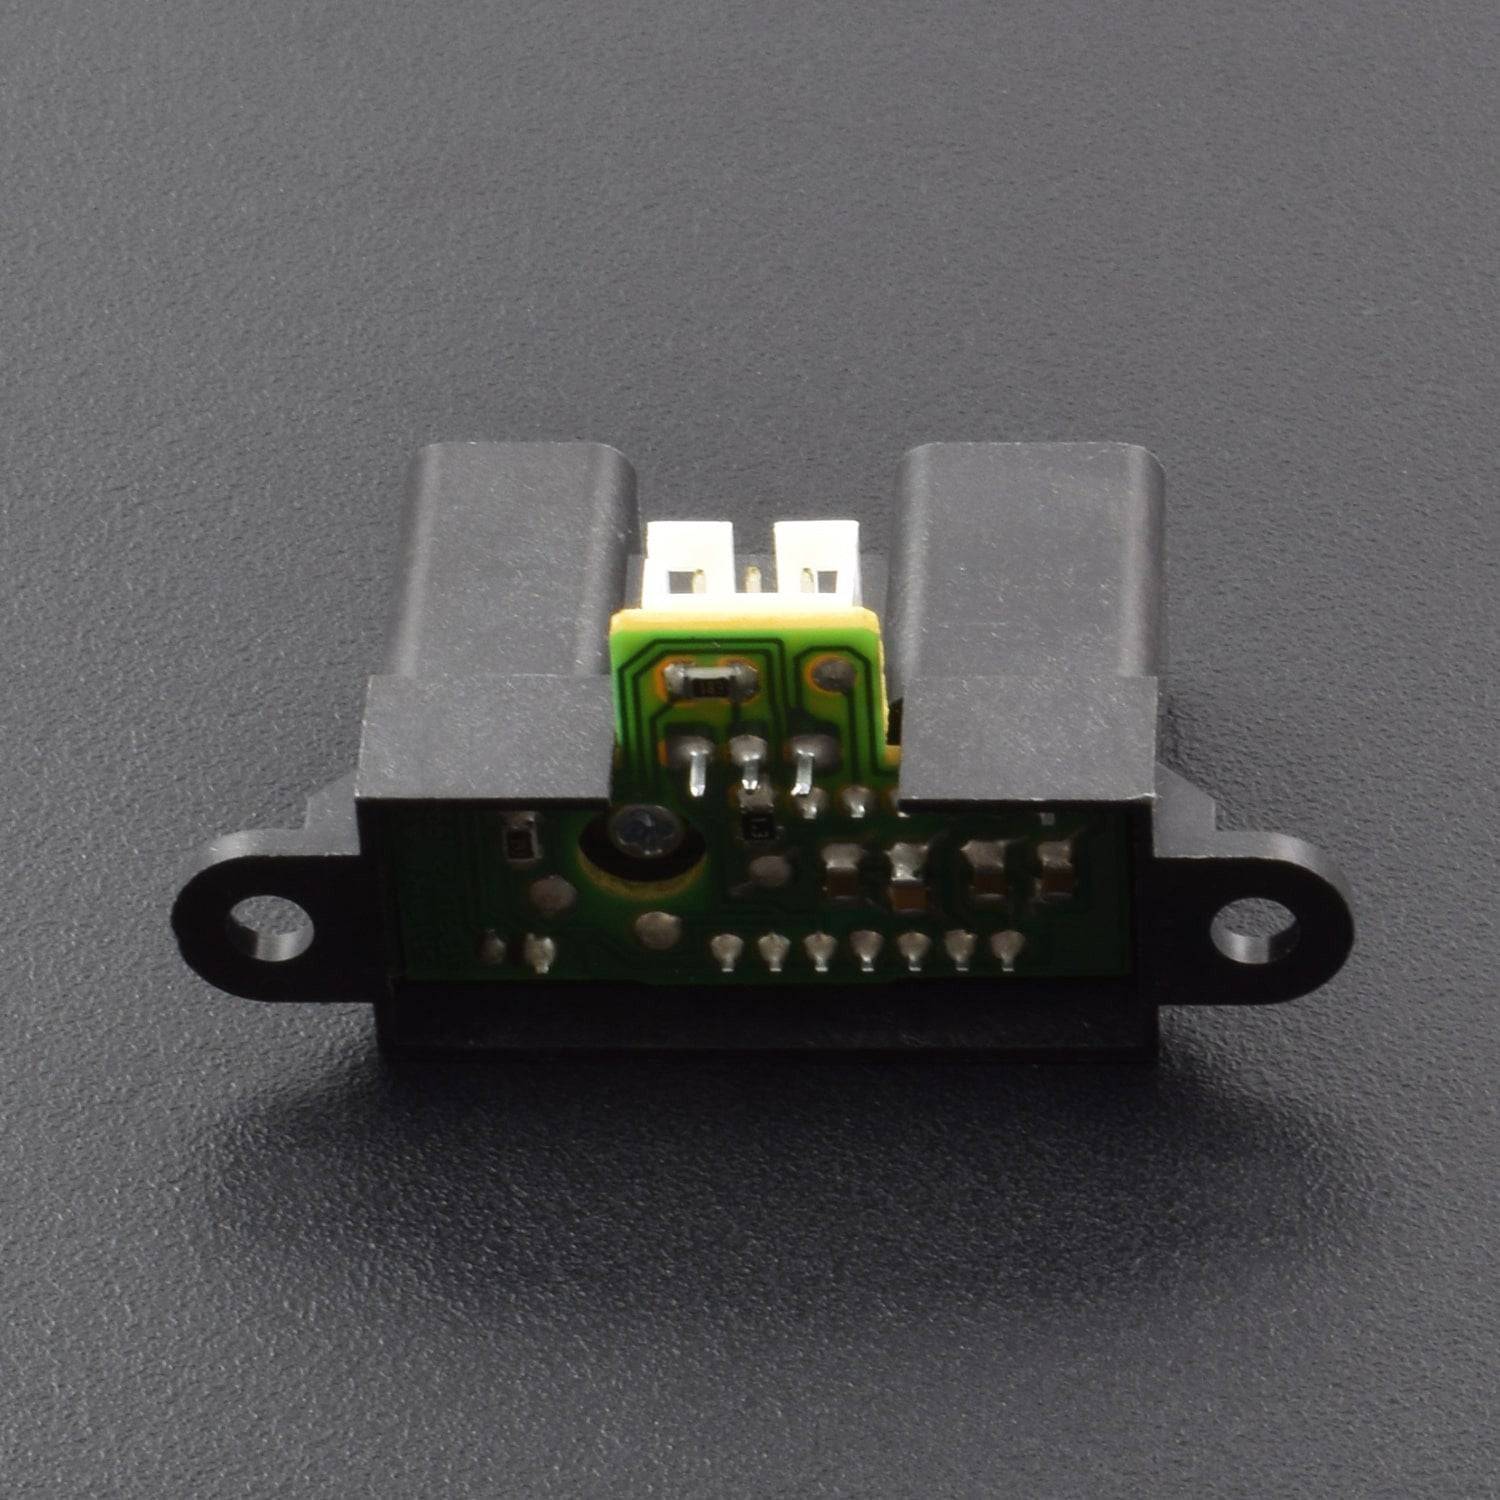 Sharp GP2Y0A02YK0F IR Range Sensor - 20 cm to 150 cm + Cable Arduino Compatible - AB065 - REES52